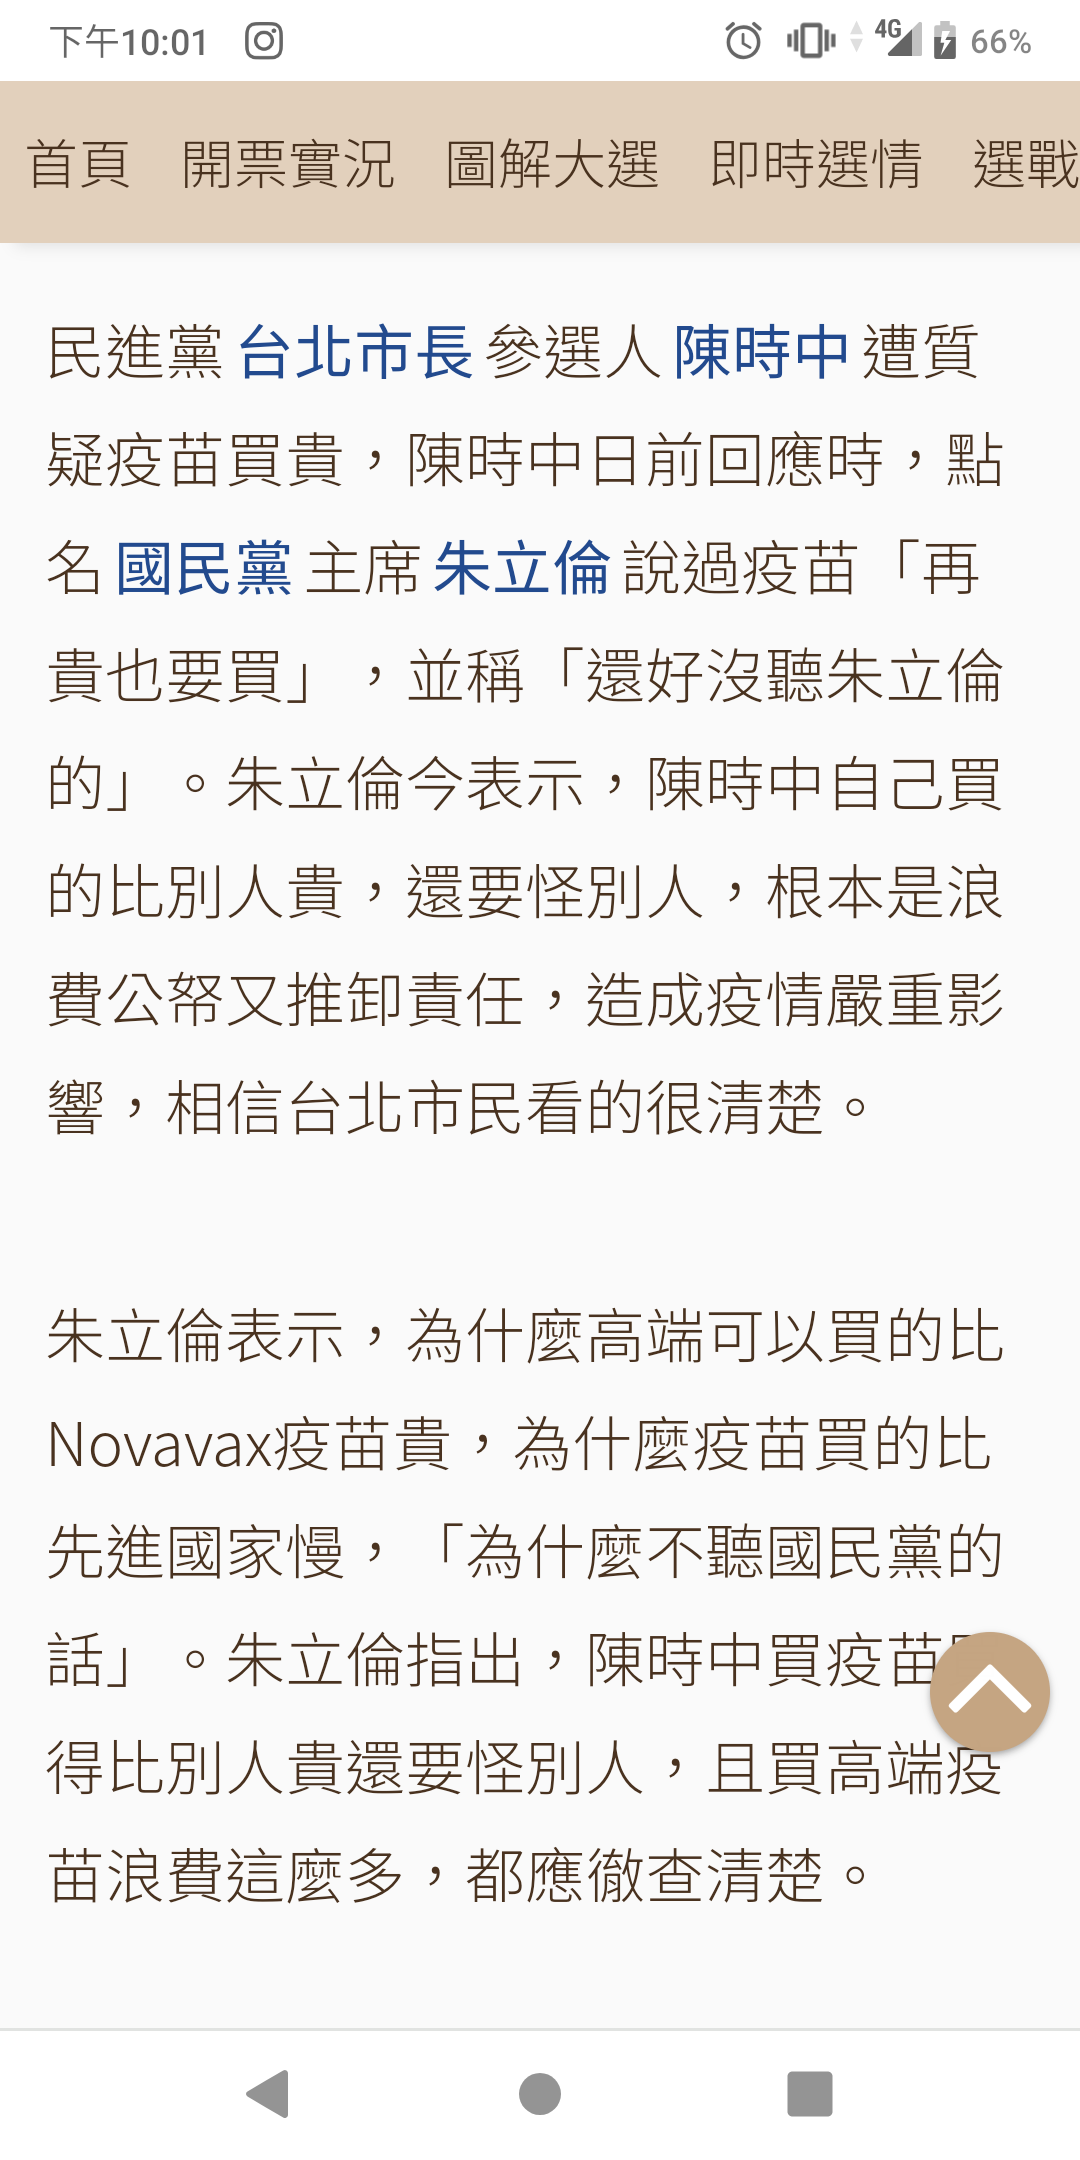 Re: [討論] BNT的關鍵出在民進黨不想跟中國買